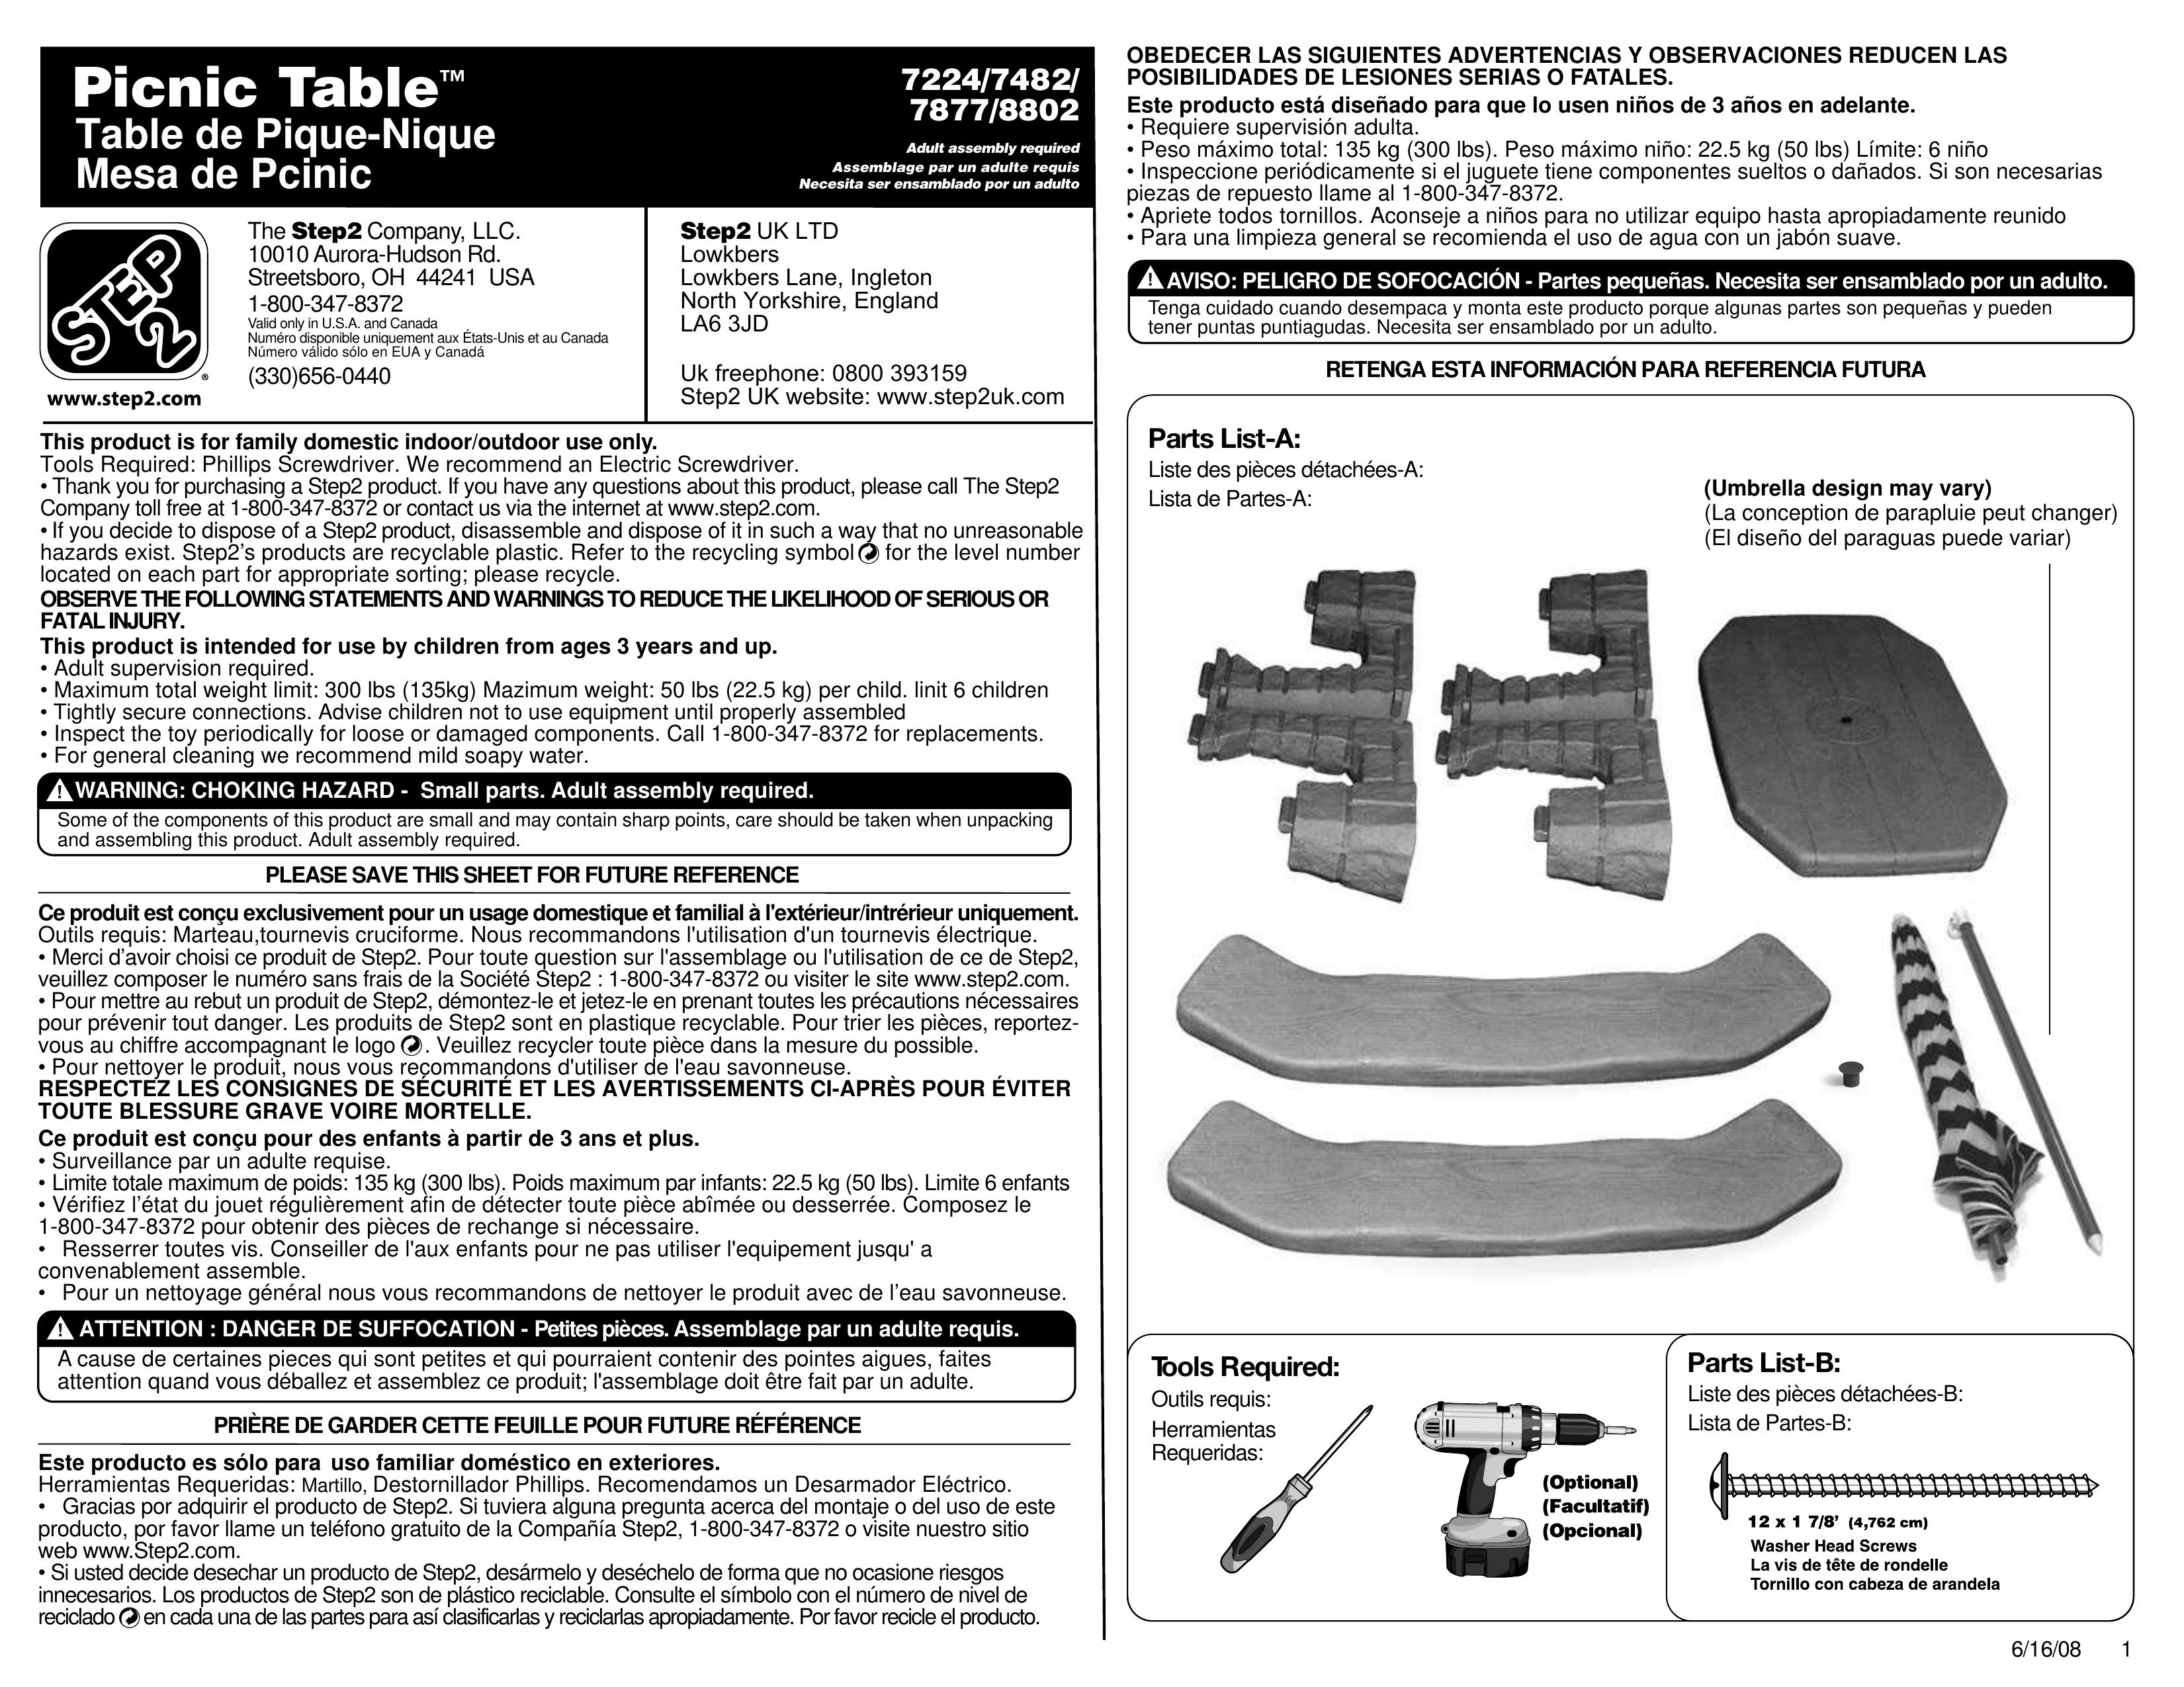 Step 2 7224 Picnic Table User Manual